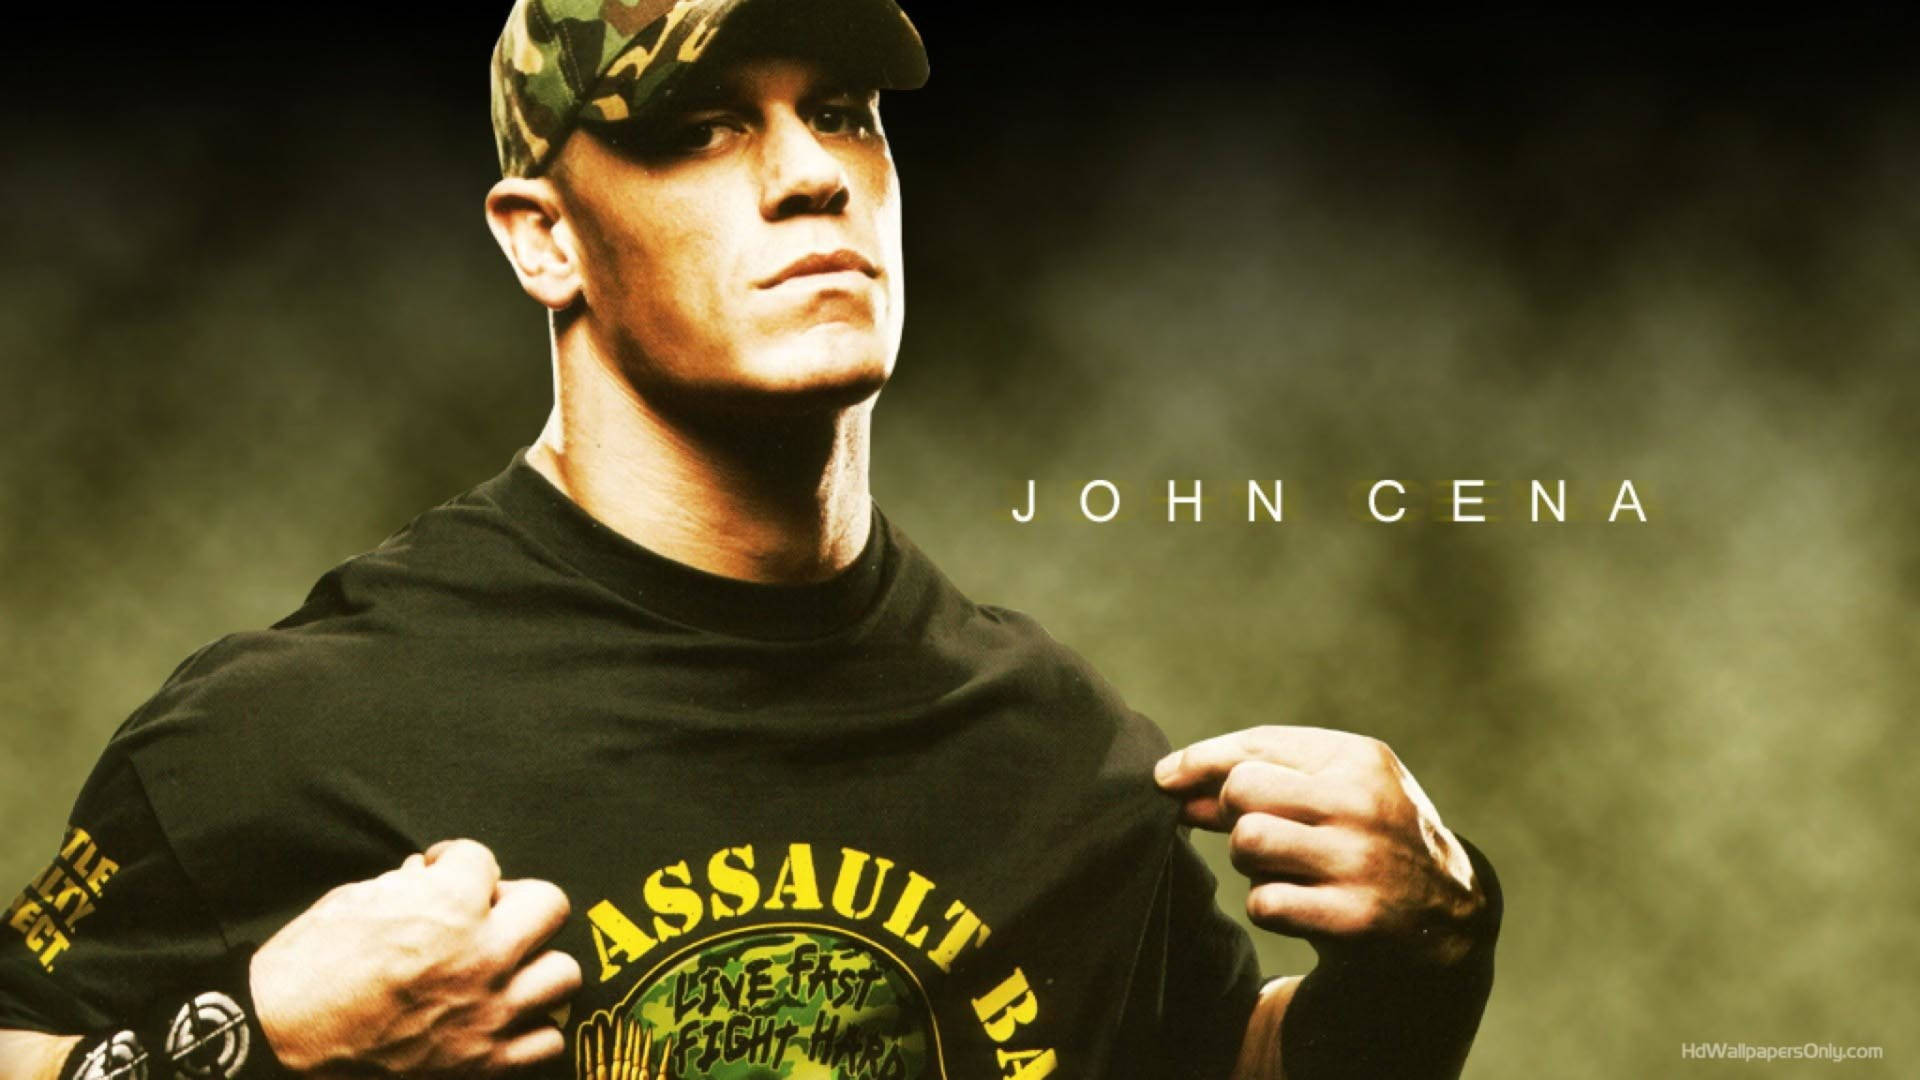 John Cena In Black T-shirt Background